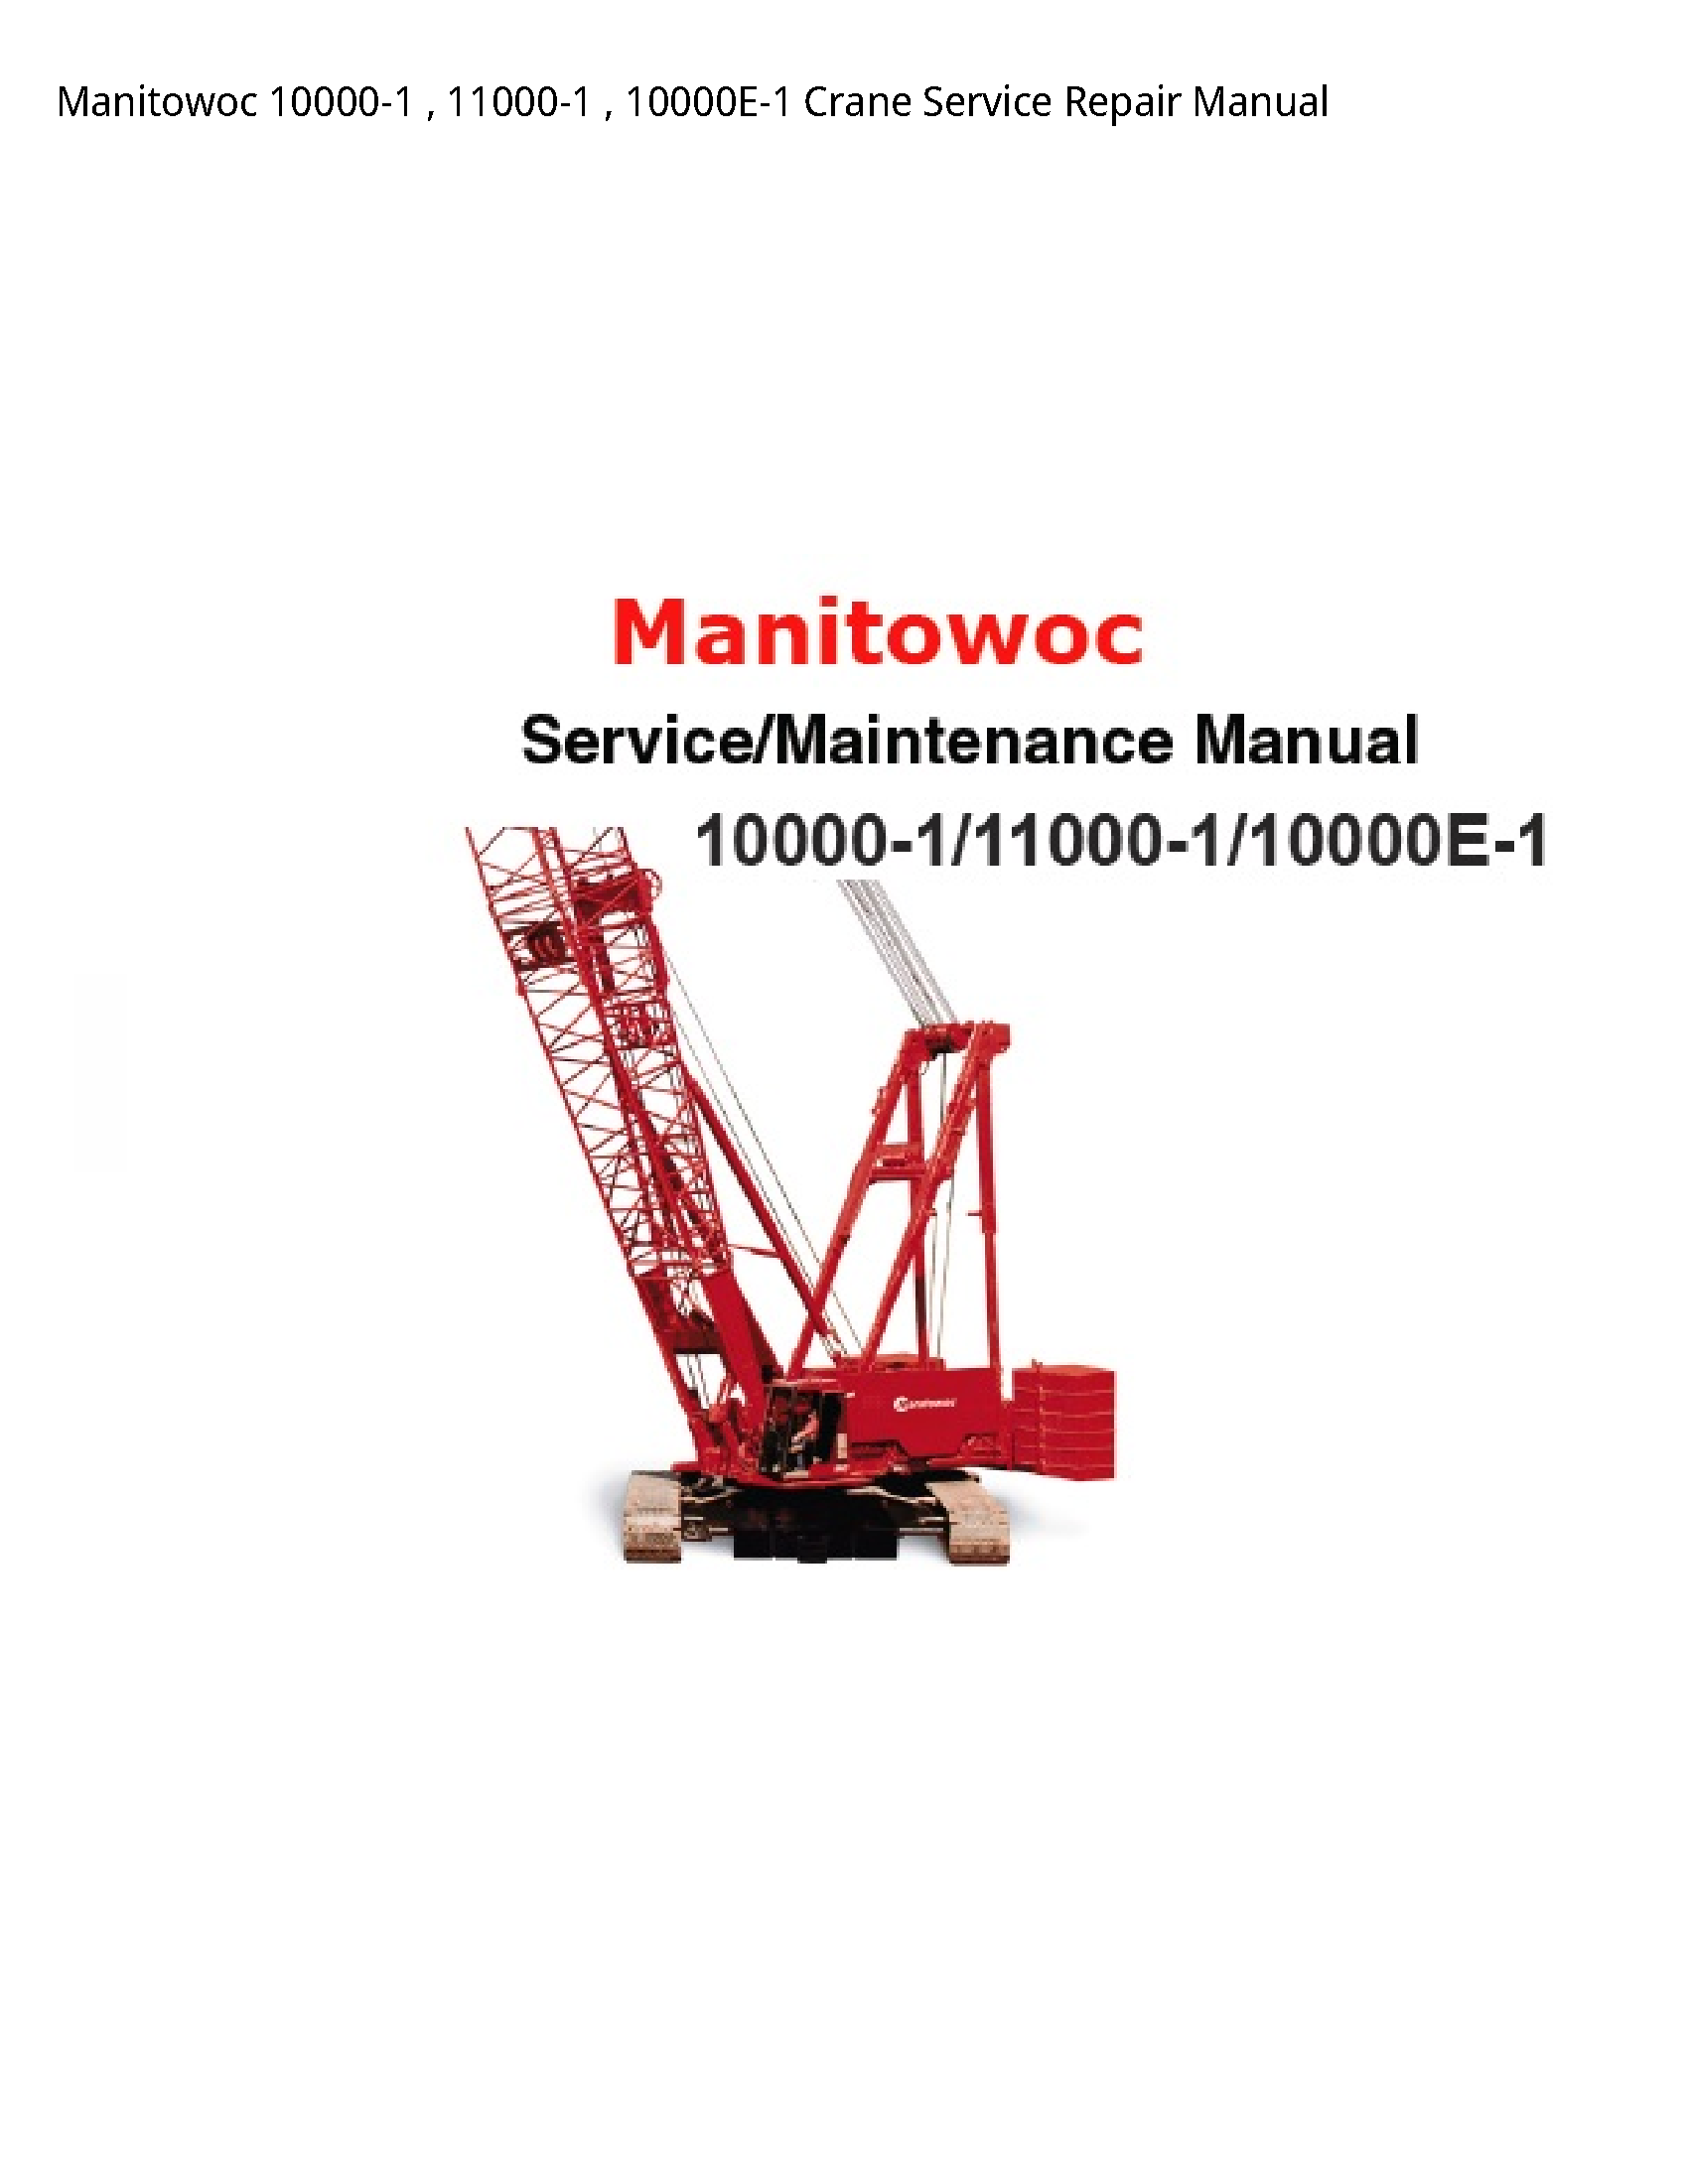 Manitowoc 10000-1 Crane manual